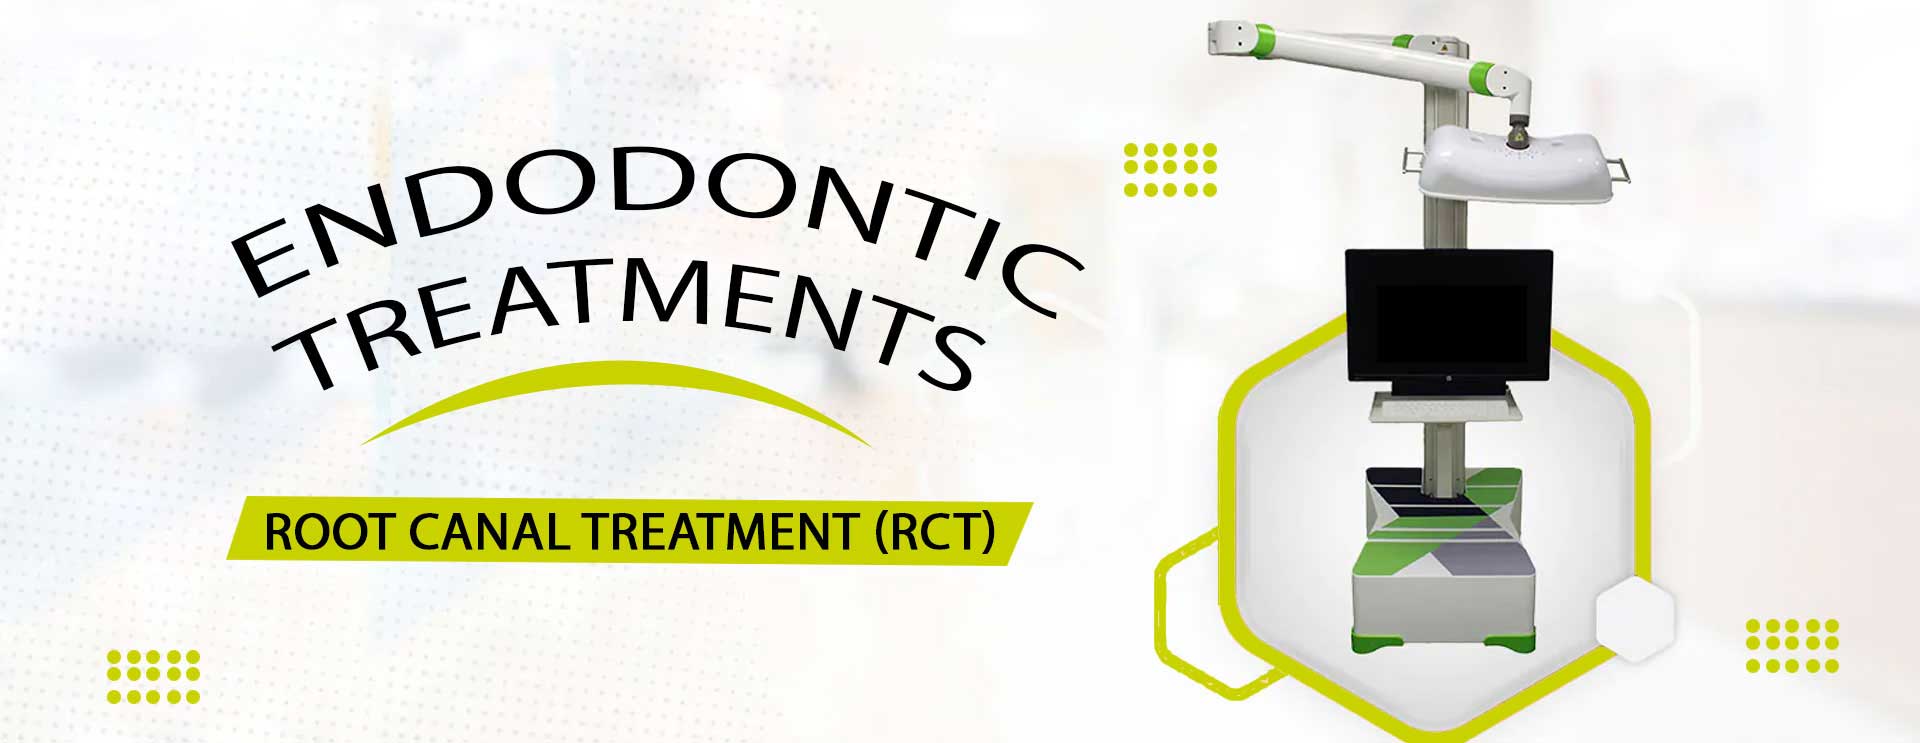 Endodontic Treatments in City Light Road